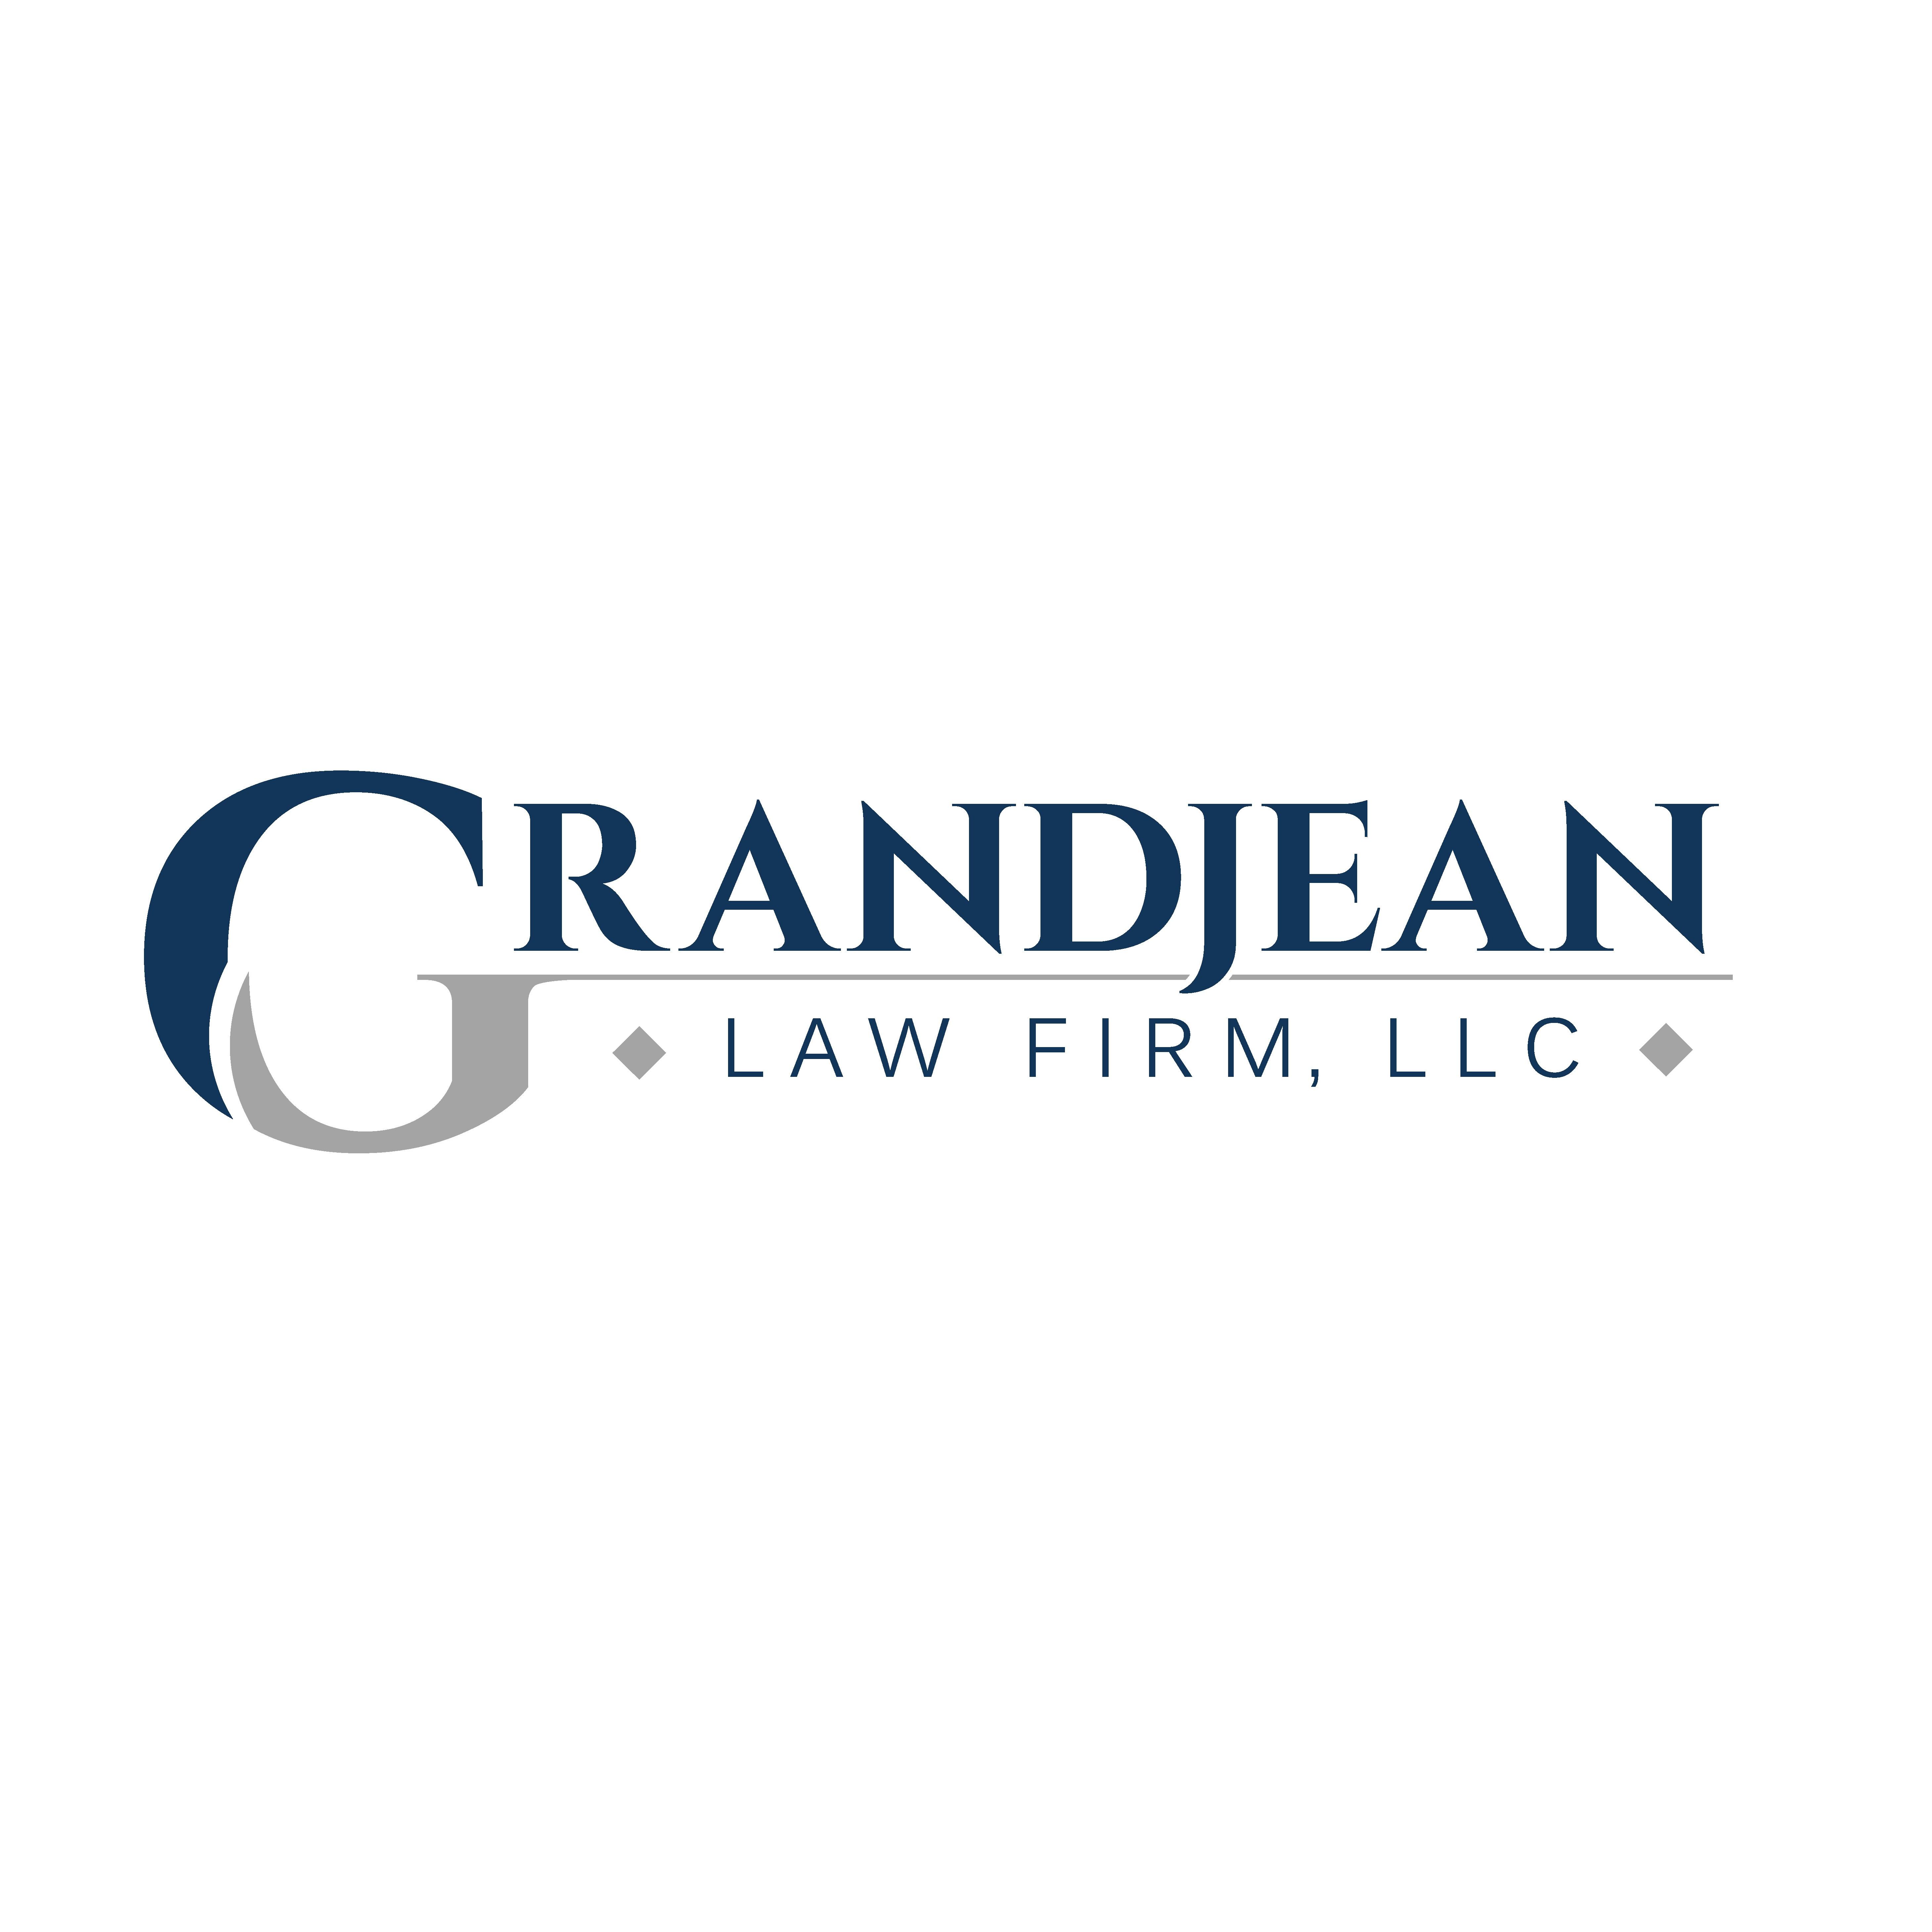 Grandjean Law Firm, LLC Logo